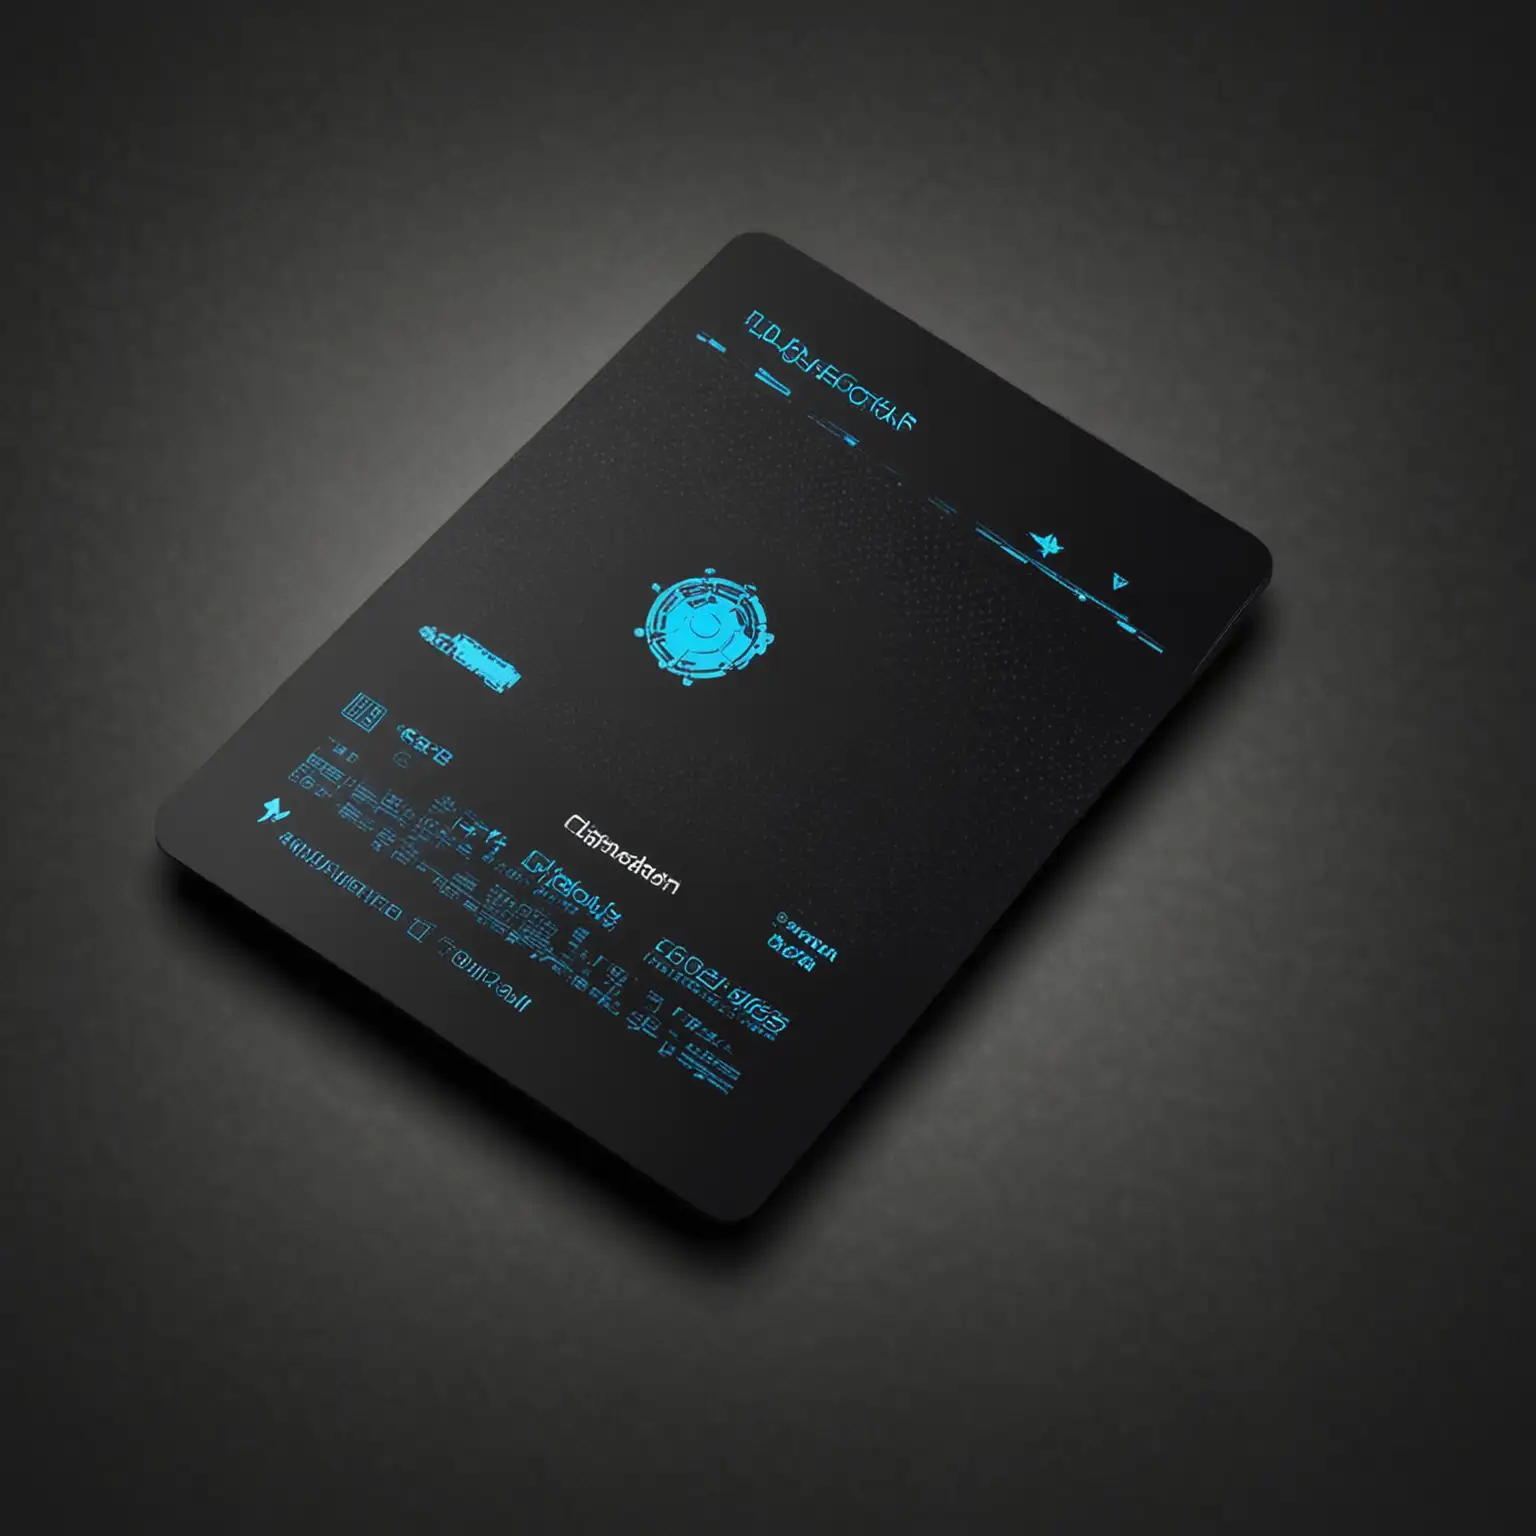 Modern Digital Access Card with Futuristic Dark Theme